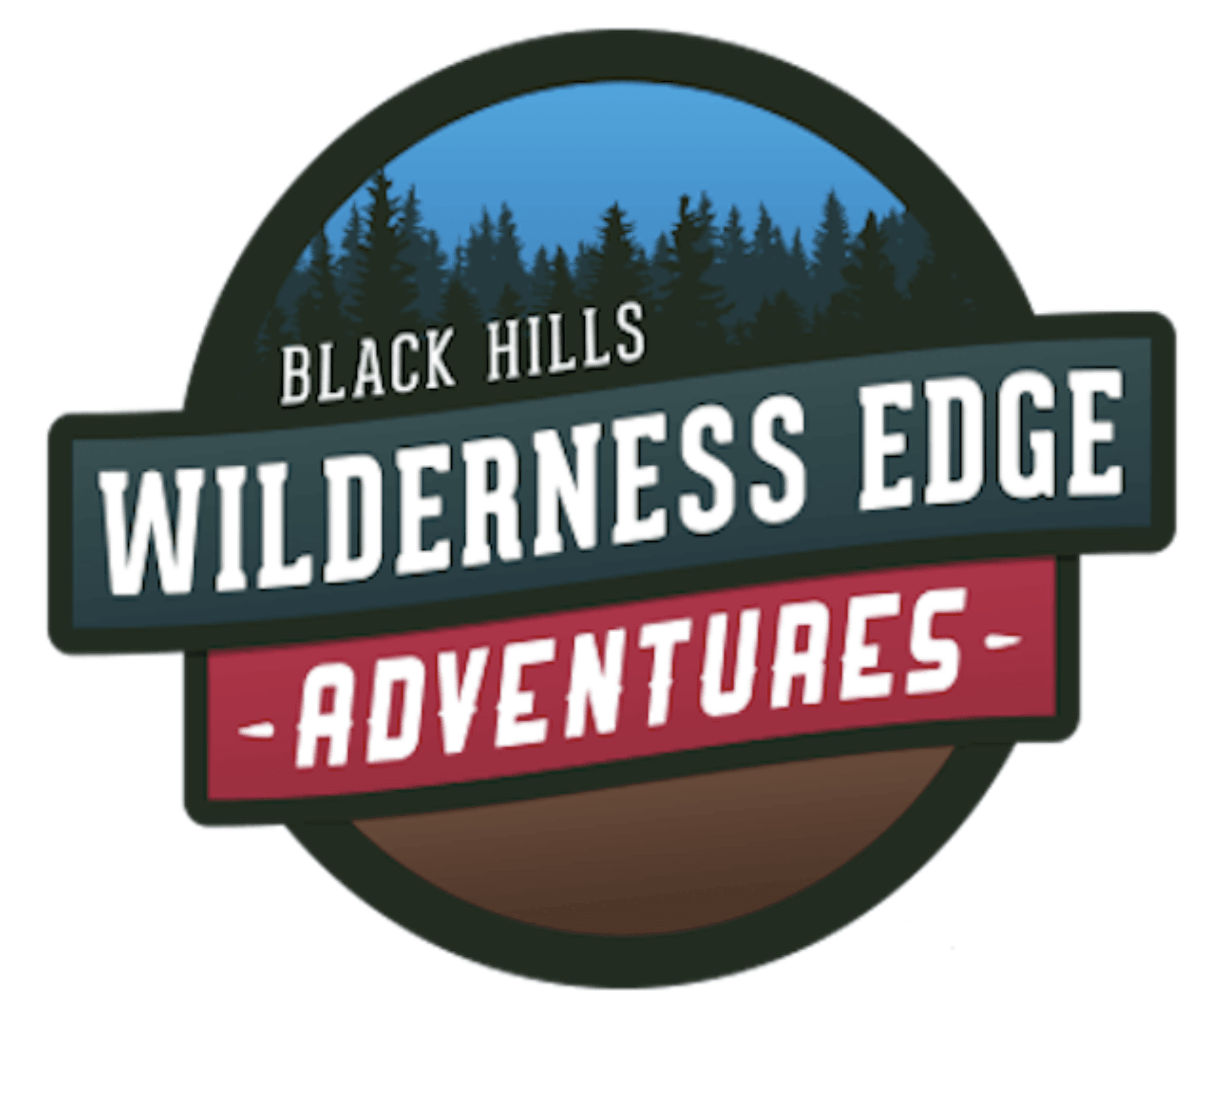 BLACK HILLS WILDERNESS EDGE ADVENTURES